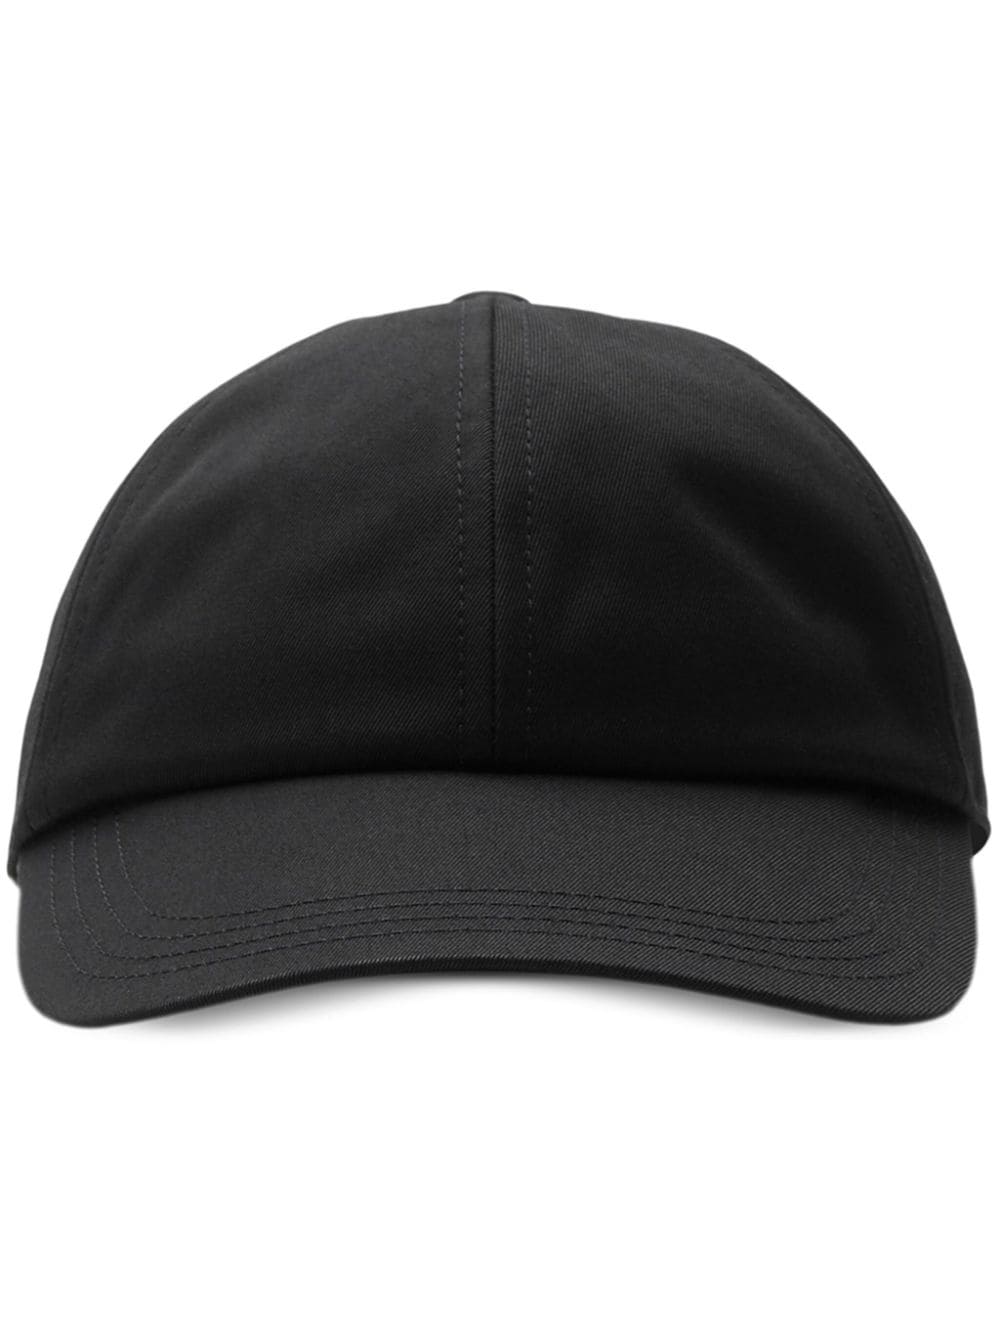 Burberry check-lined baseball cap - Black von Burberry